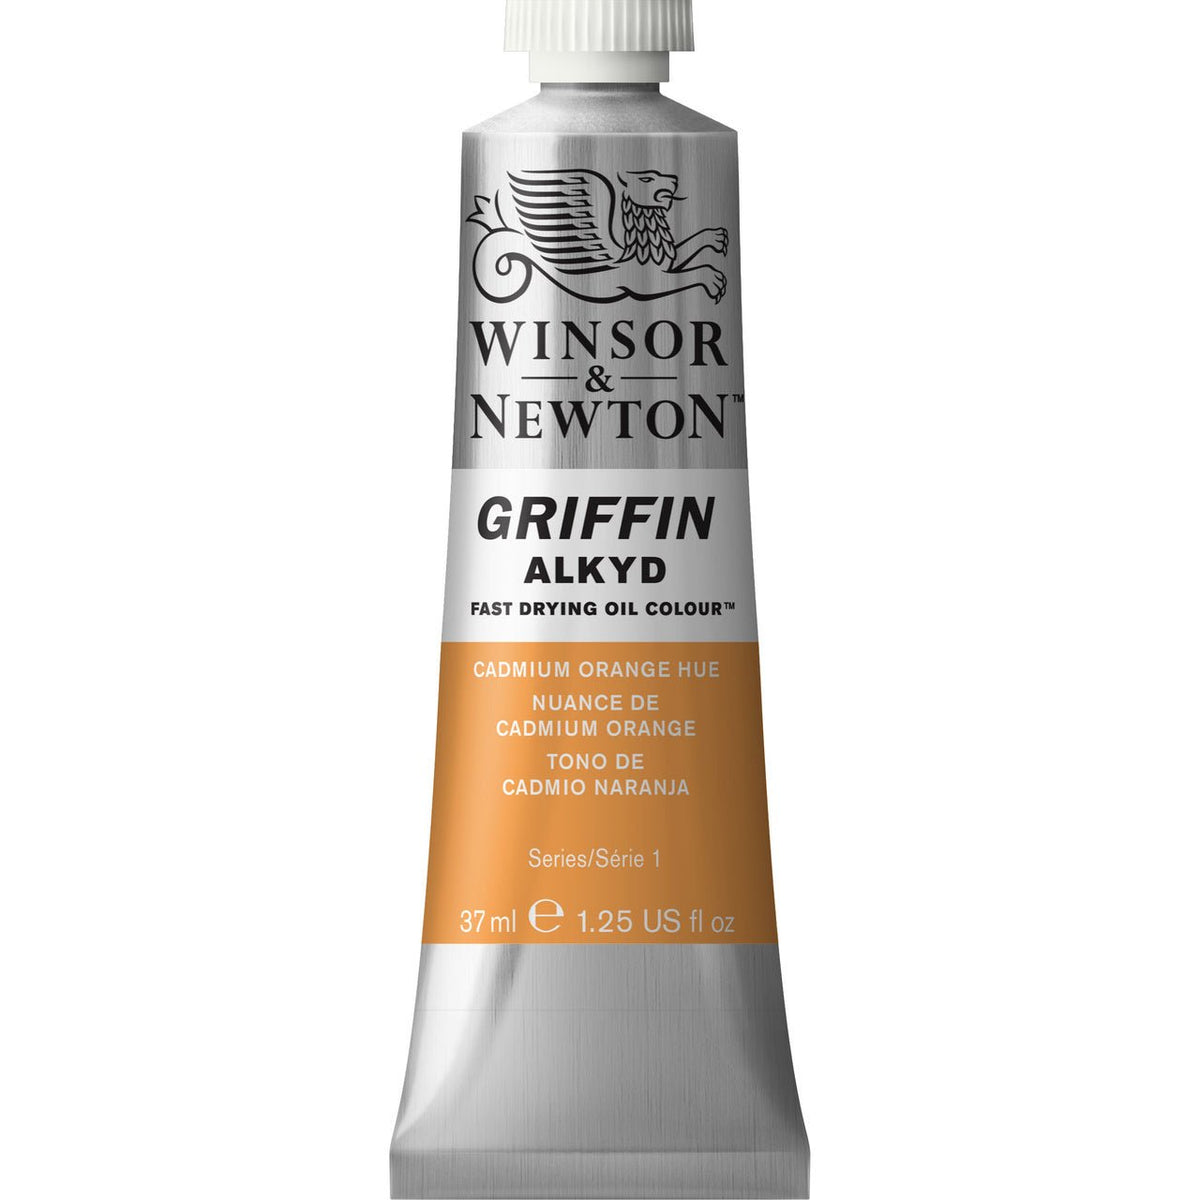 Winsor & Newton Griffin Alkyd 37ml Cadmium Orange Hue - merriartist.com